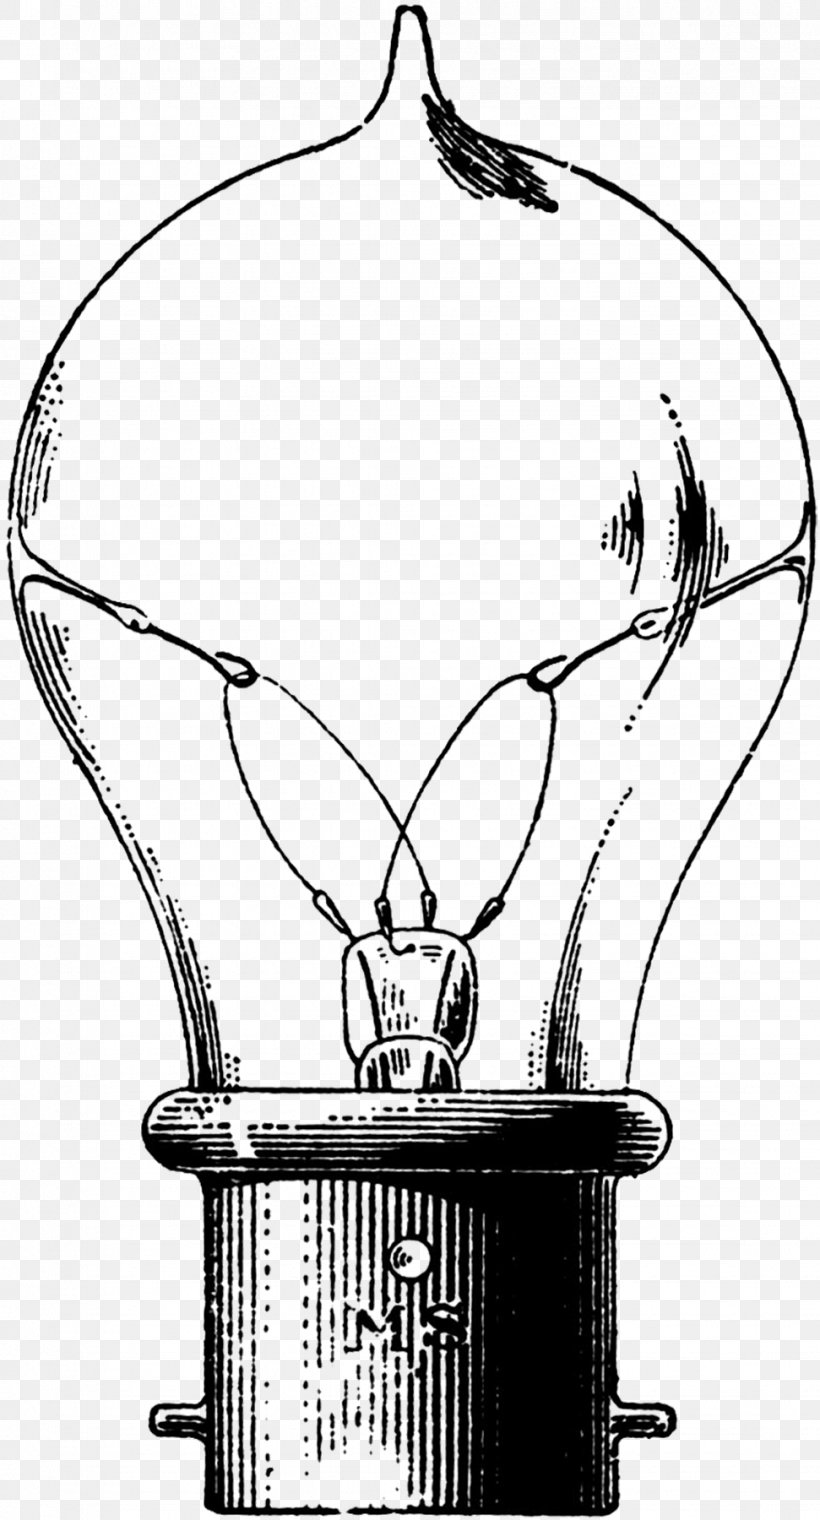 Incandescent Light Bulb Lamp Clip Art, PNG, 971x1800px, Light, Black And White, Drawing, Edison Light Bulb, Incandescent Light Bulb Download Free